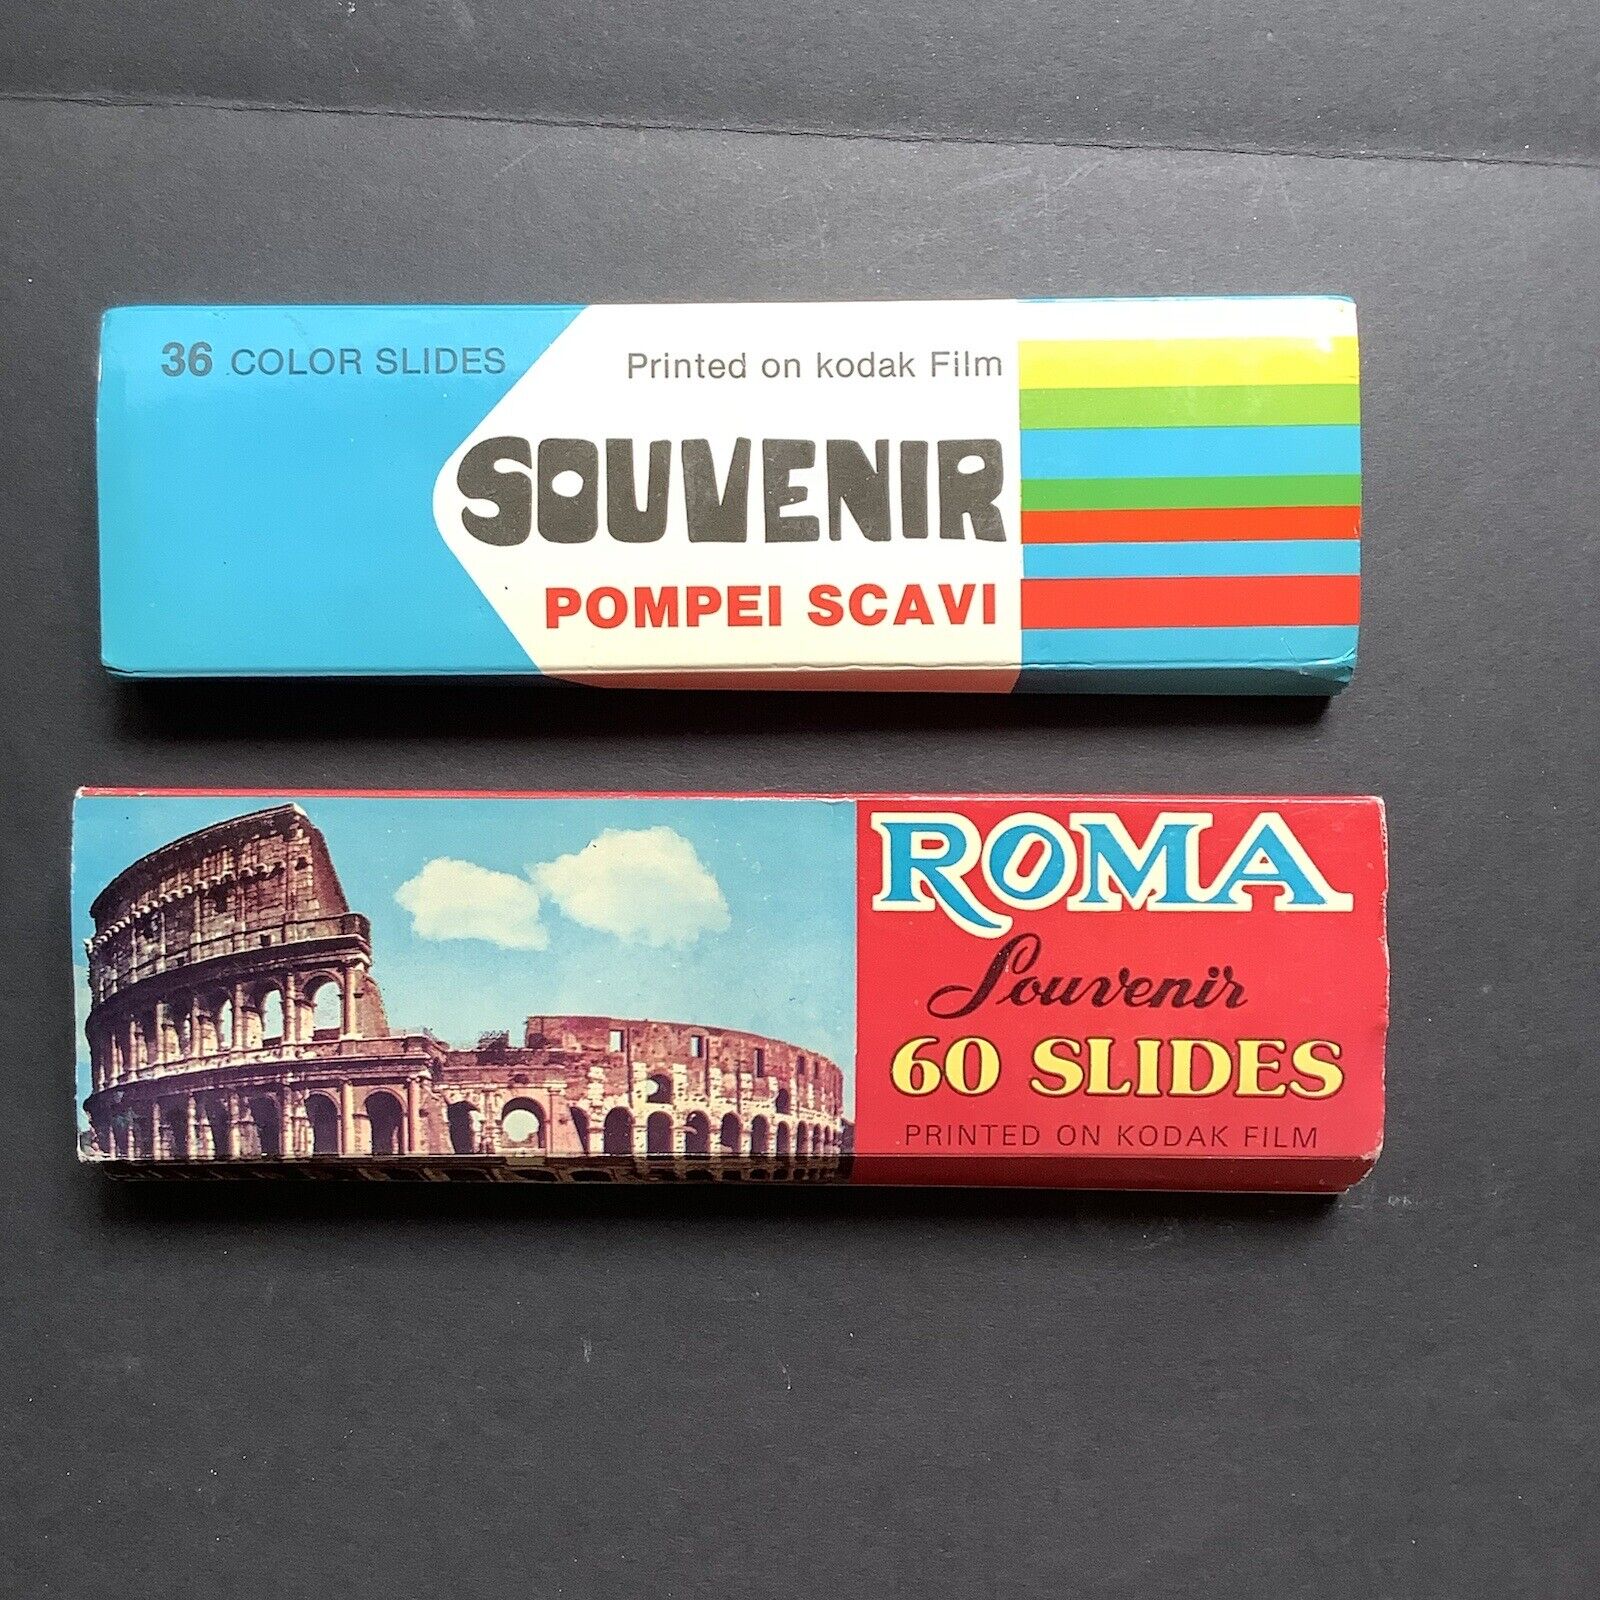 Vintage Italy Souvenir Rome Roma 60 Color Slides + Pompei Scavi Kodak Film